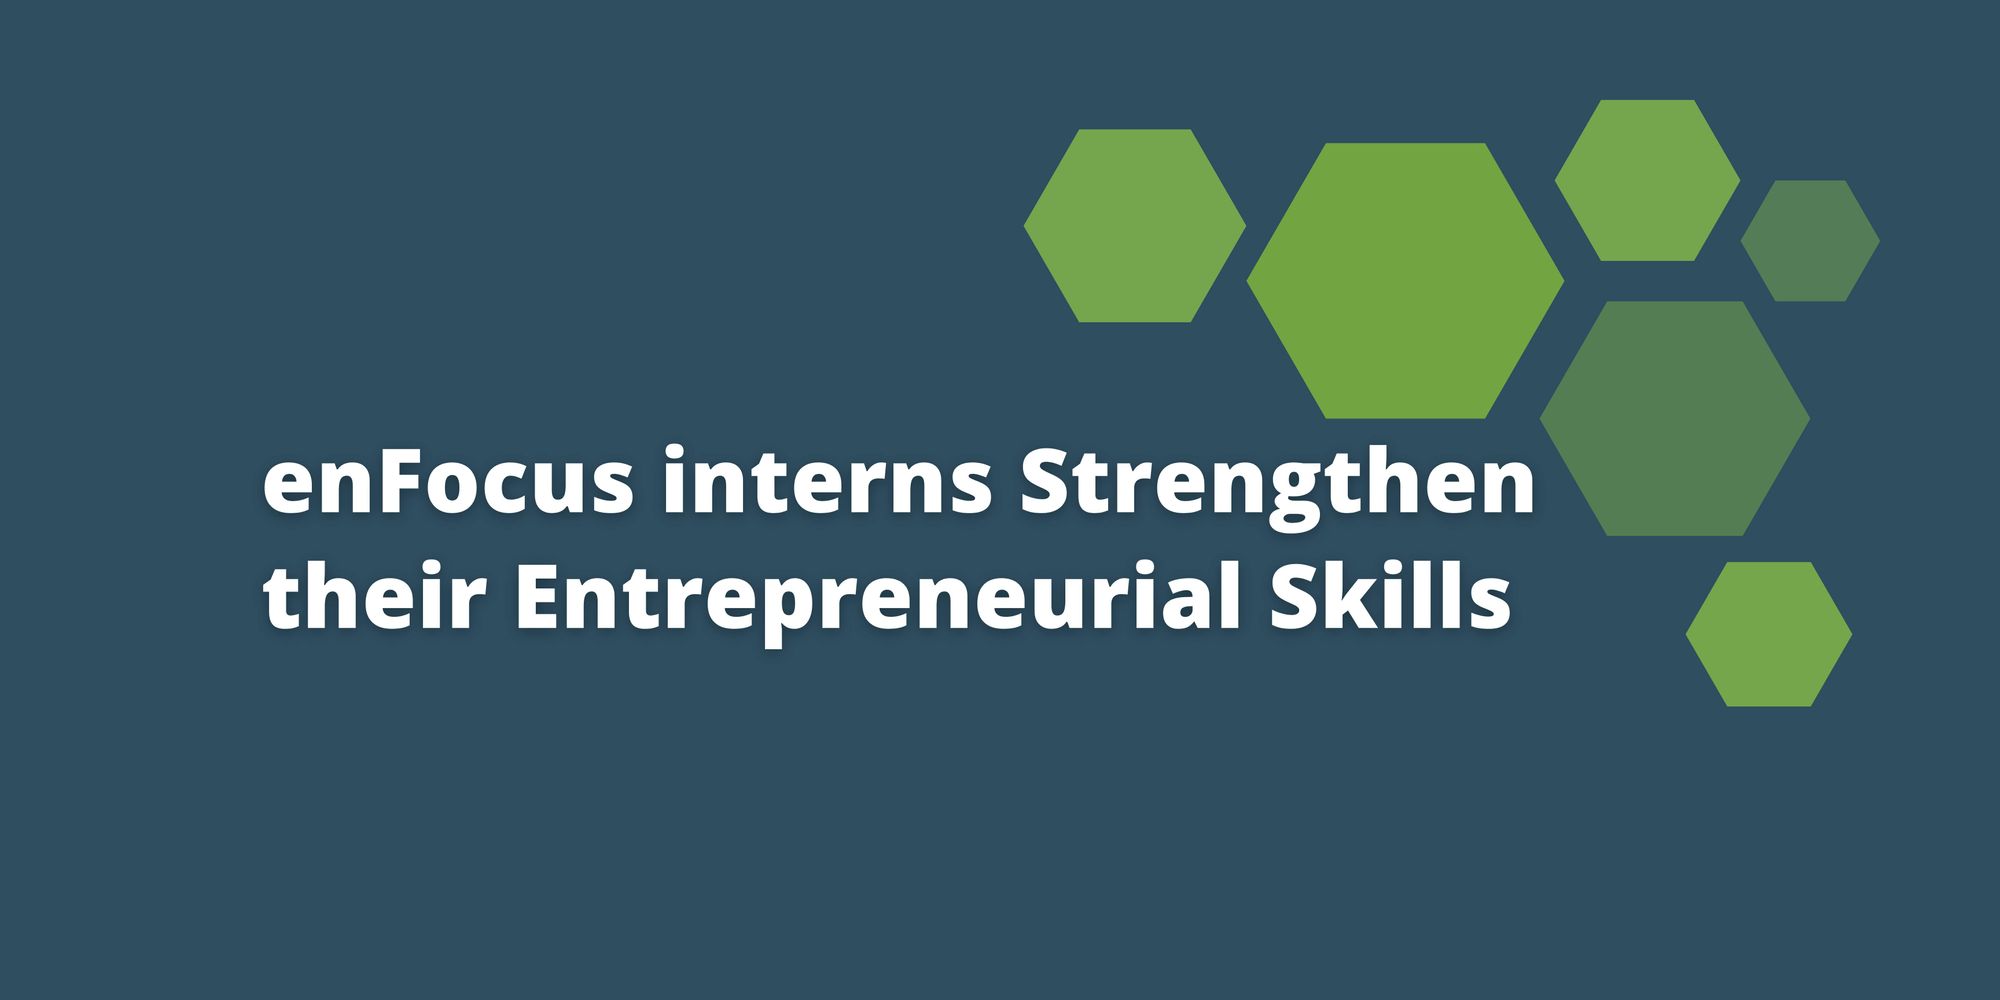 enFocus interns Strengthen their Entrepreneurial Skills